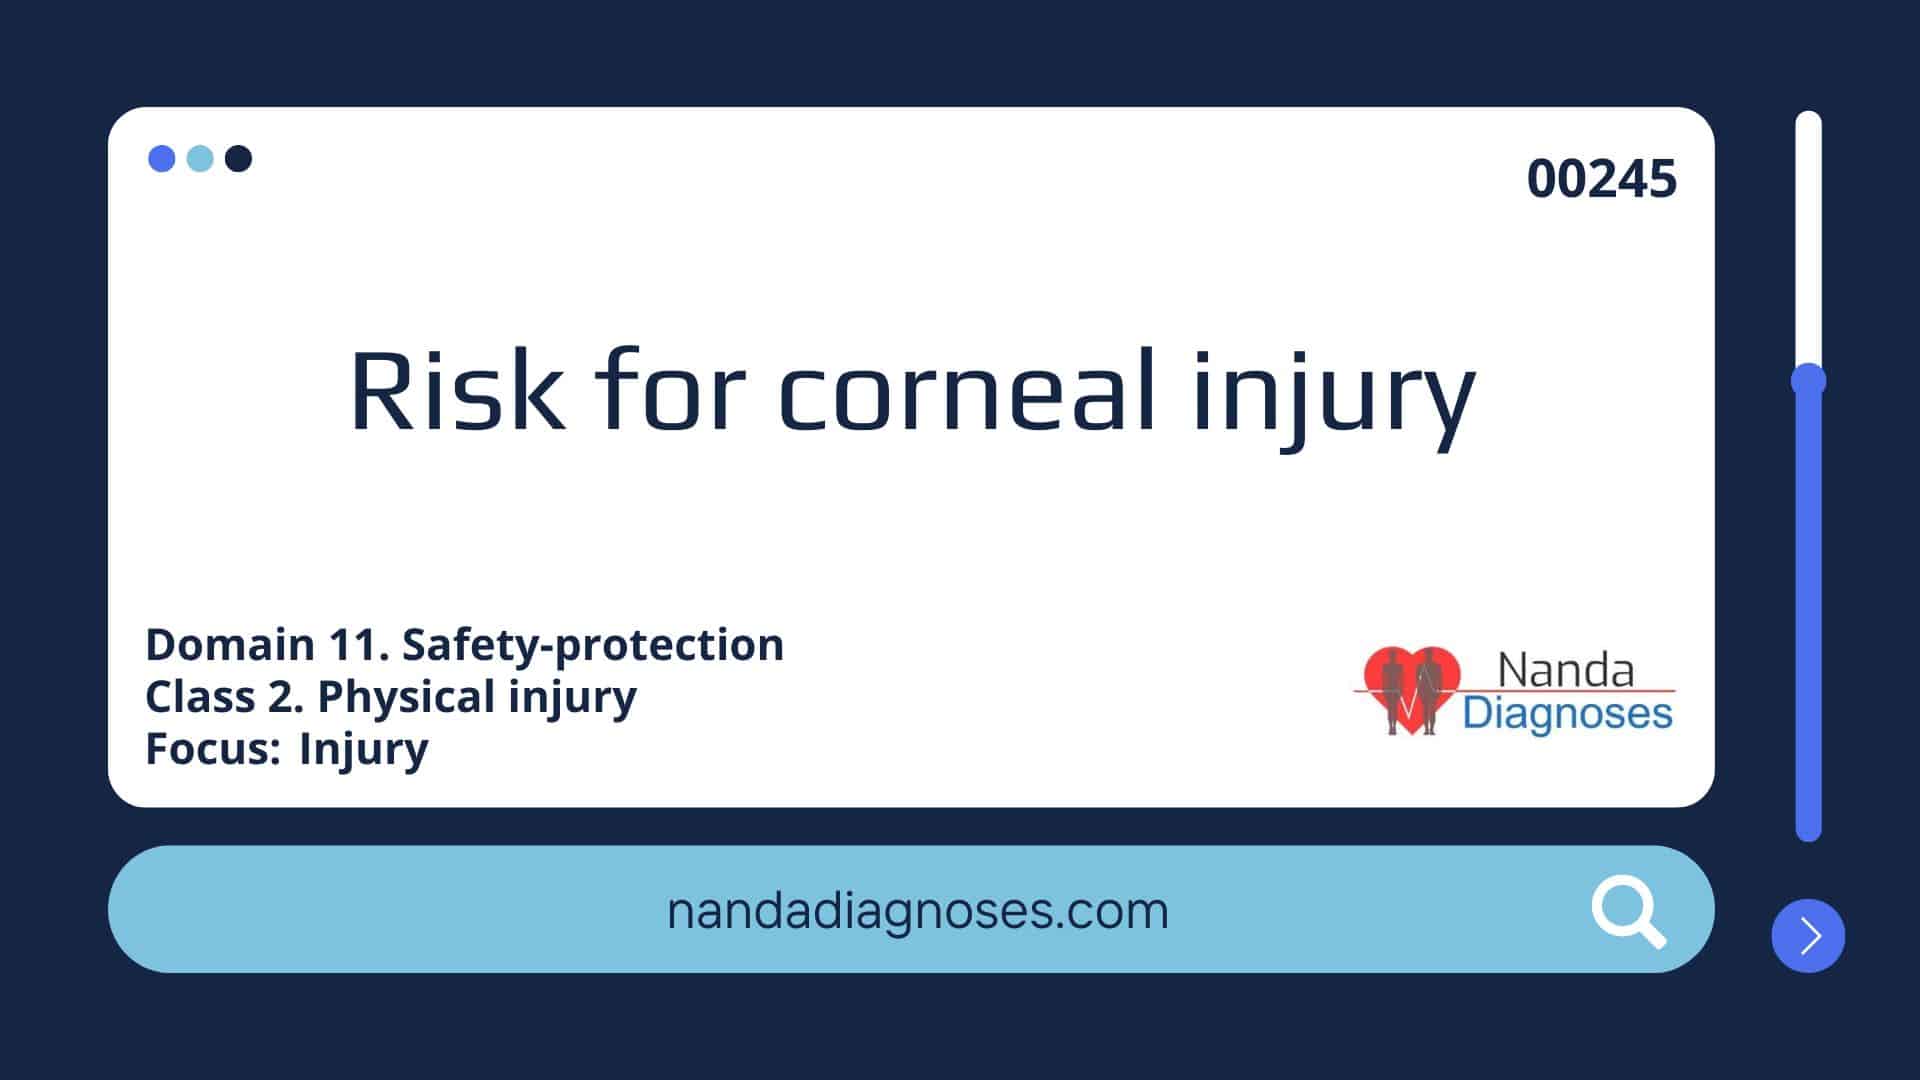 Nursing diagnosis Risk for corneal injury